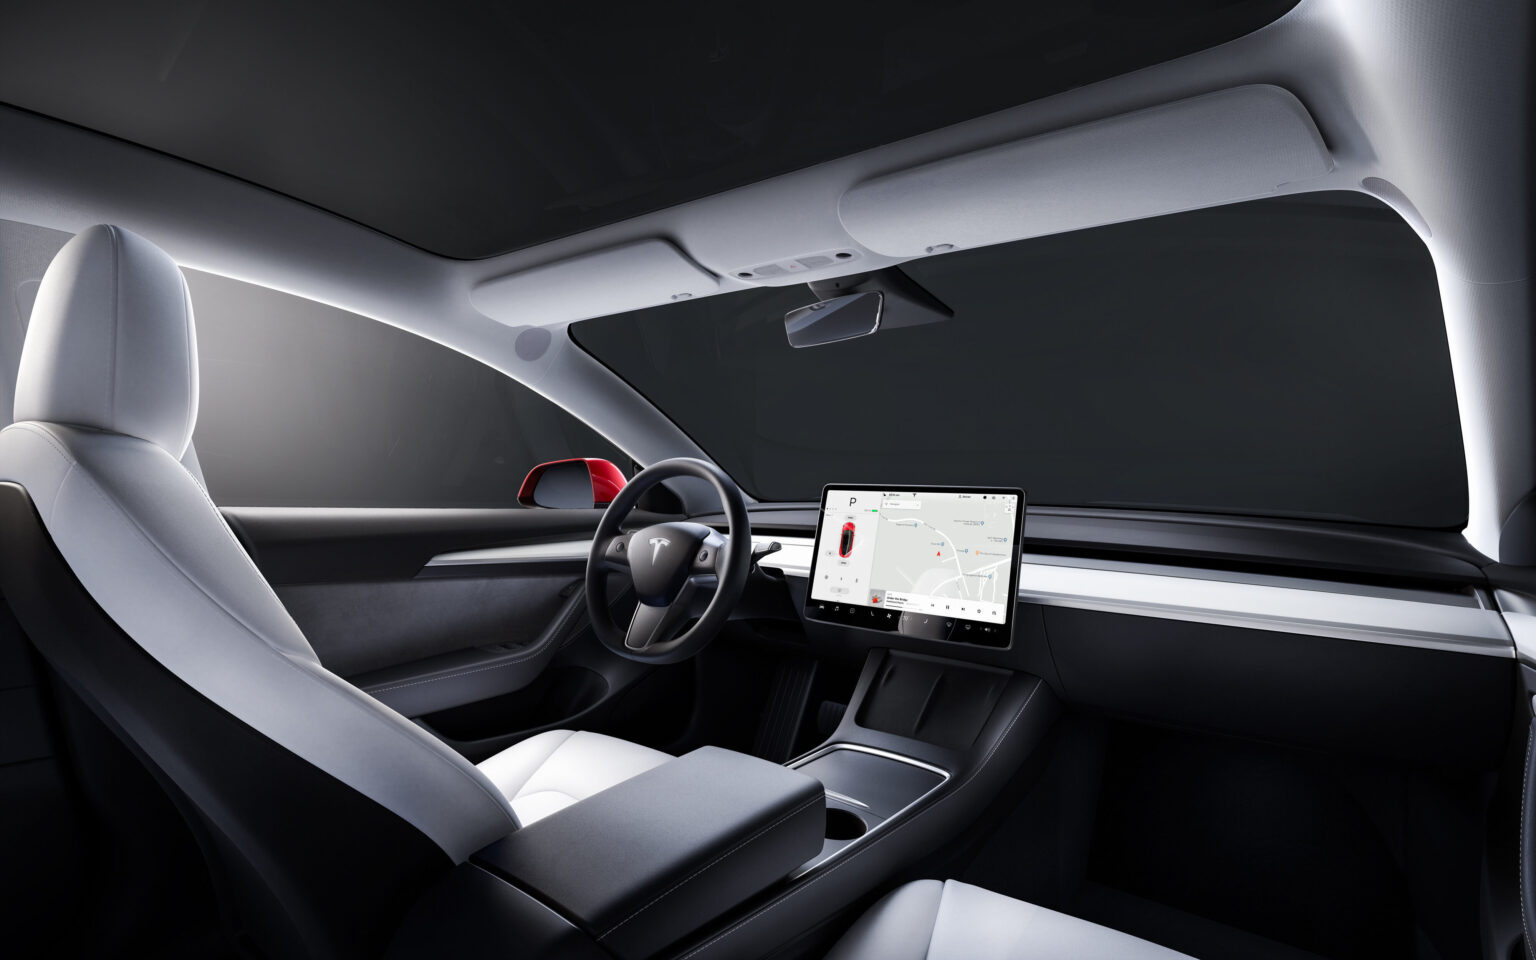 2023 Tesla Model 3 Q3 2023 Sales Interior Image 2